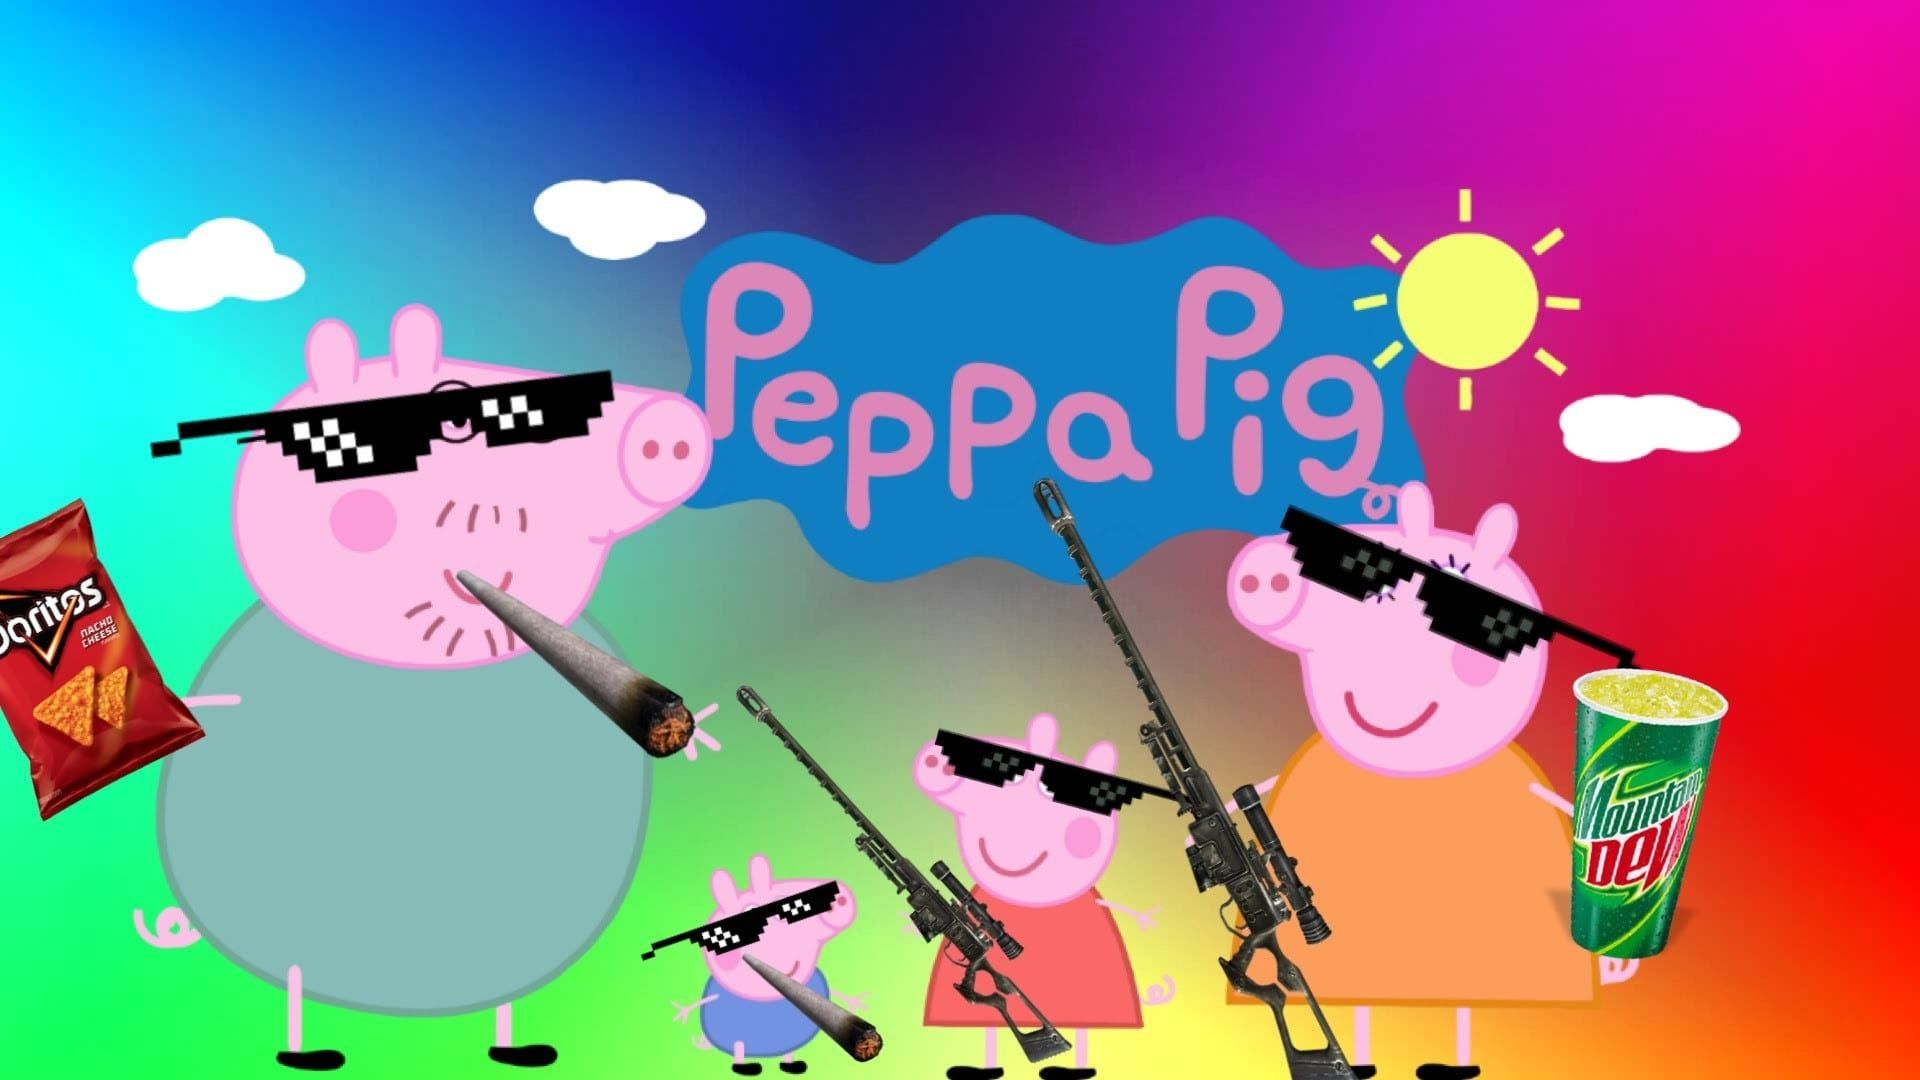 Peppa Pig Free HD Wallpaper